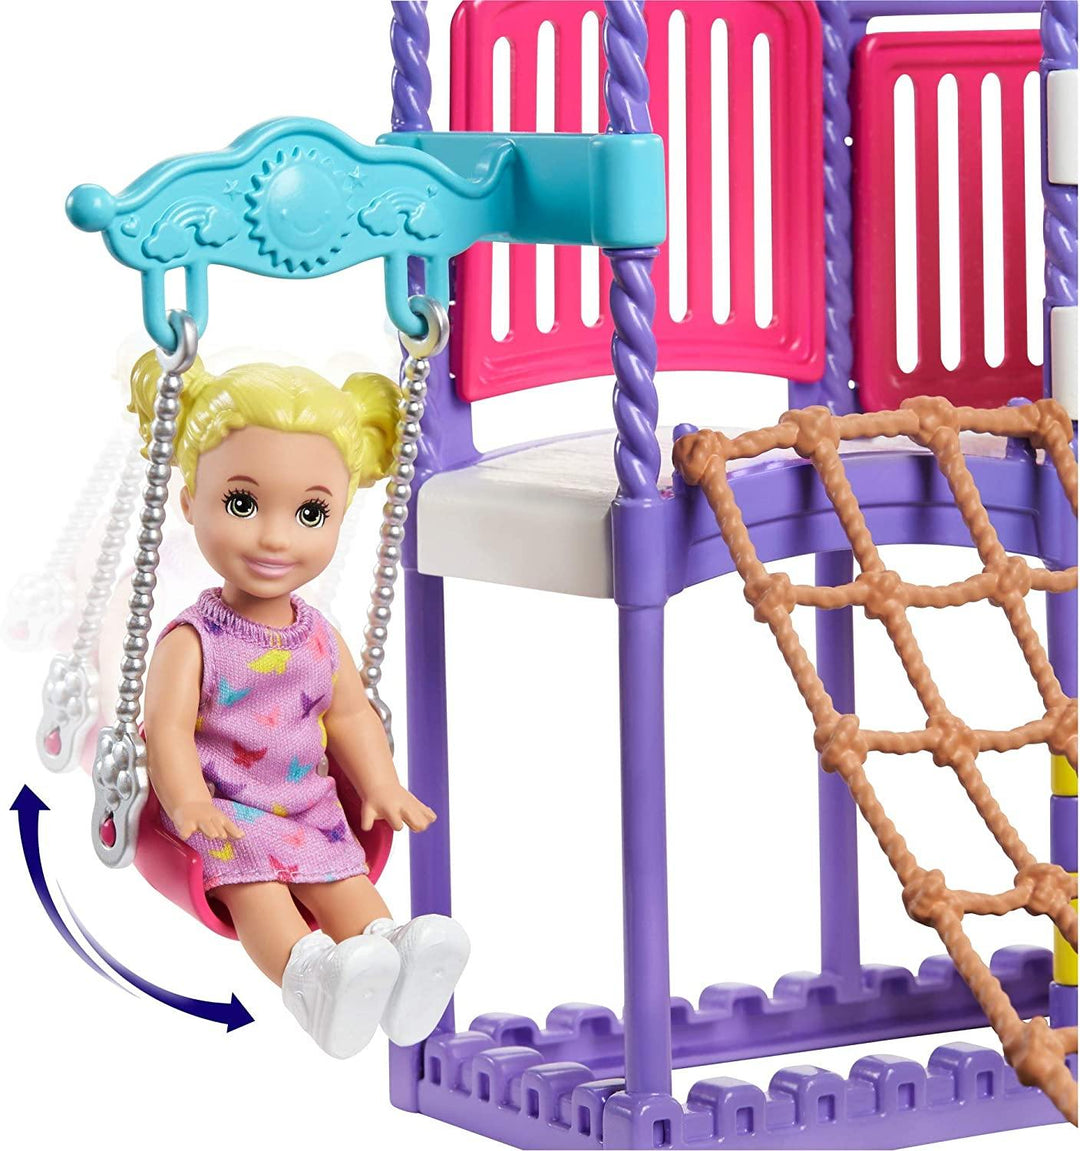 Barbie GHV89 Skipper Babysitters Inc Climb 'n Explore Playground Dolls and Playsets - Yachew